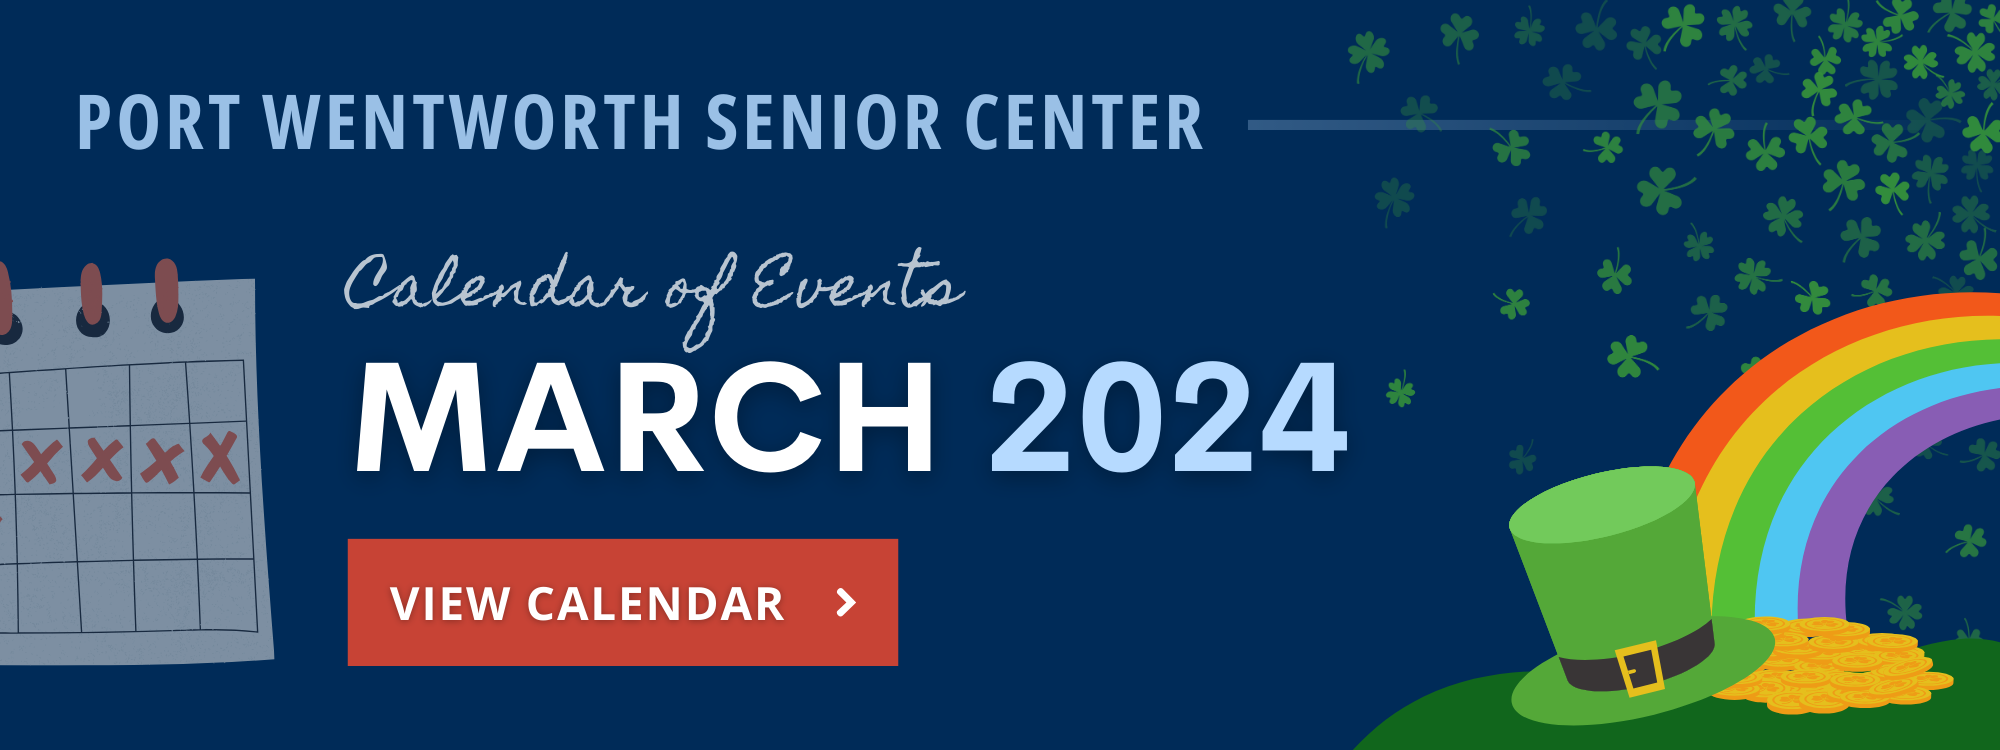 March 2024 Senior Center Events